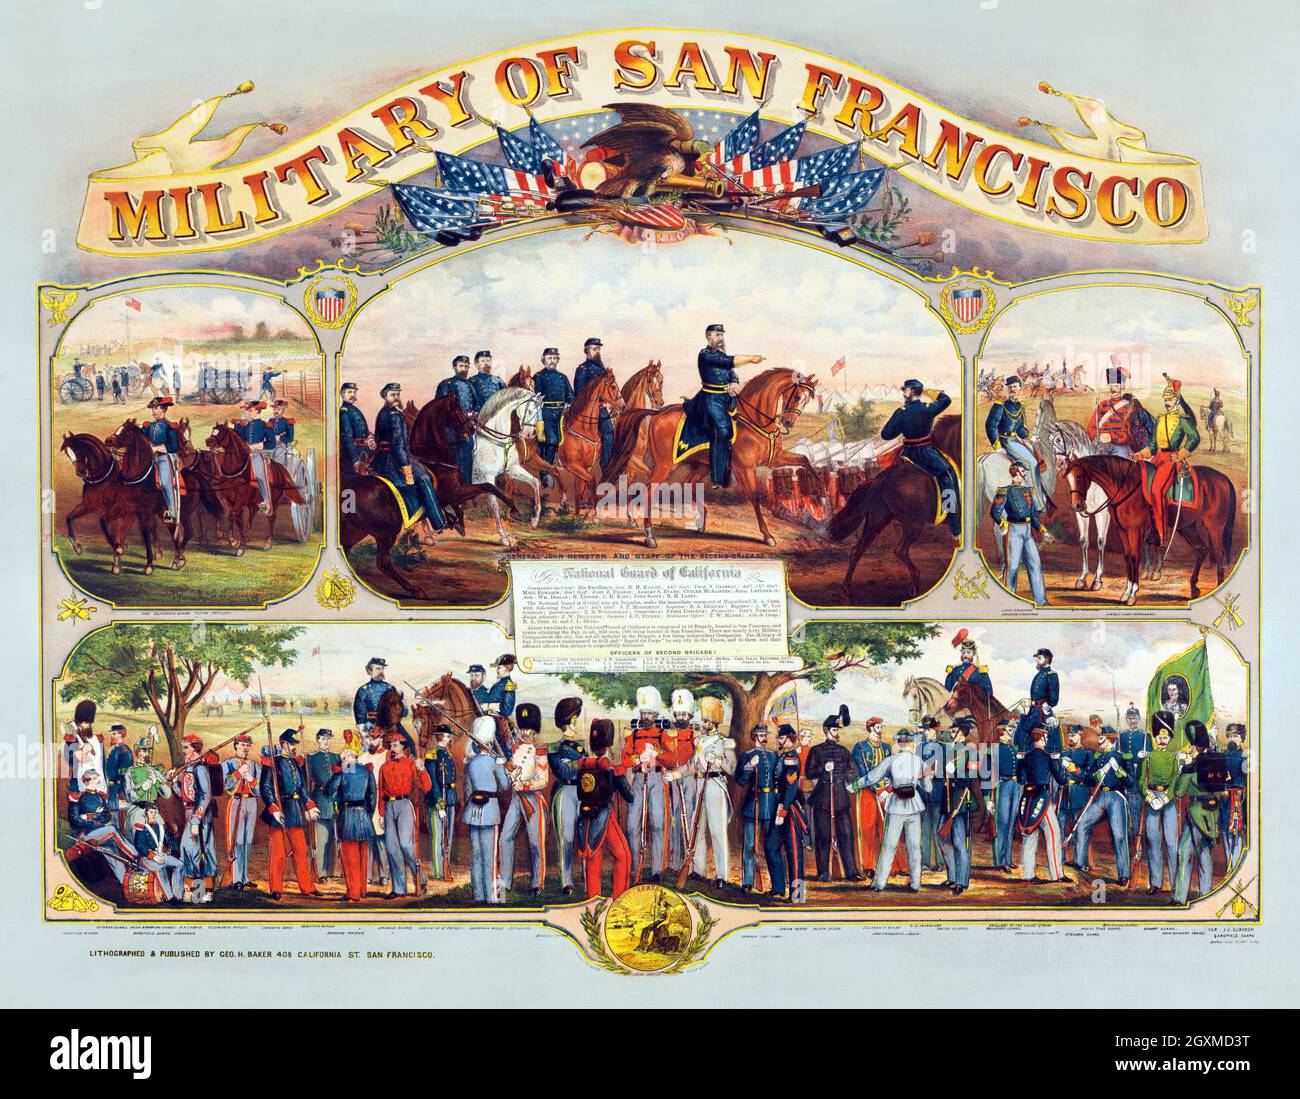 Military of San Francisco Stock Photo